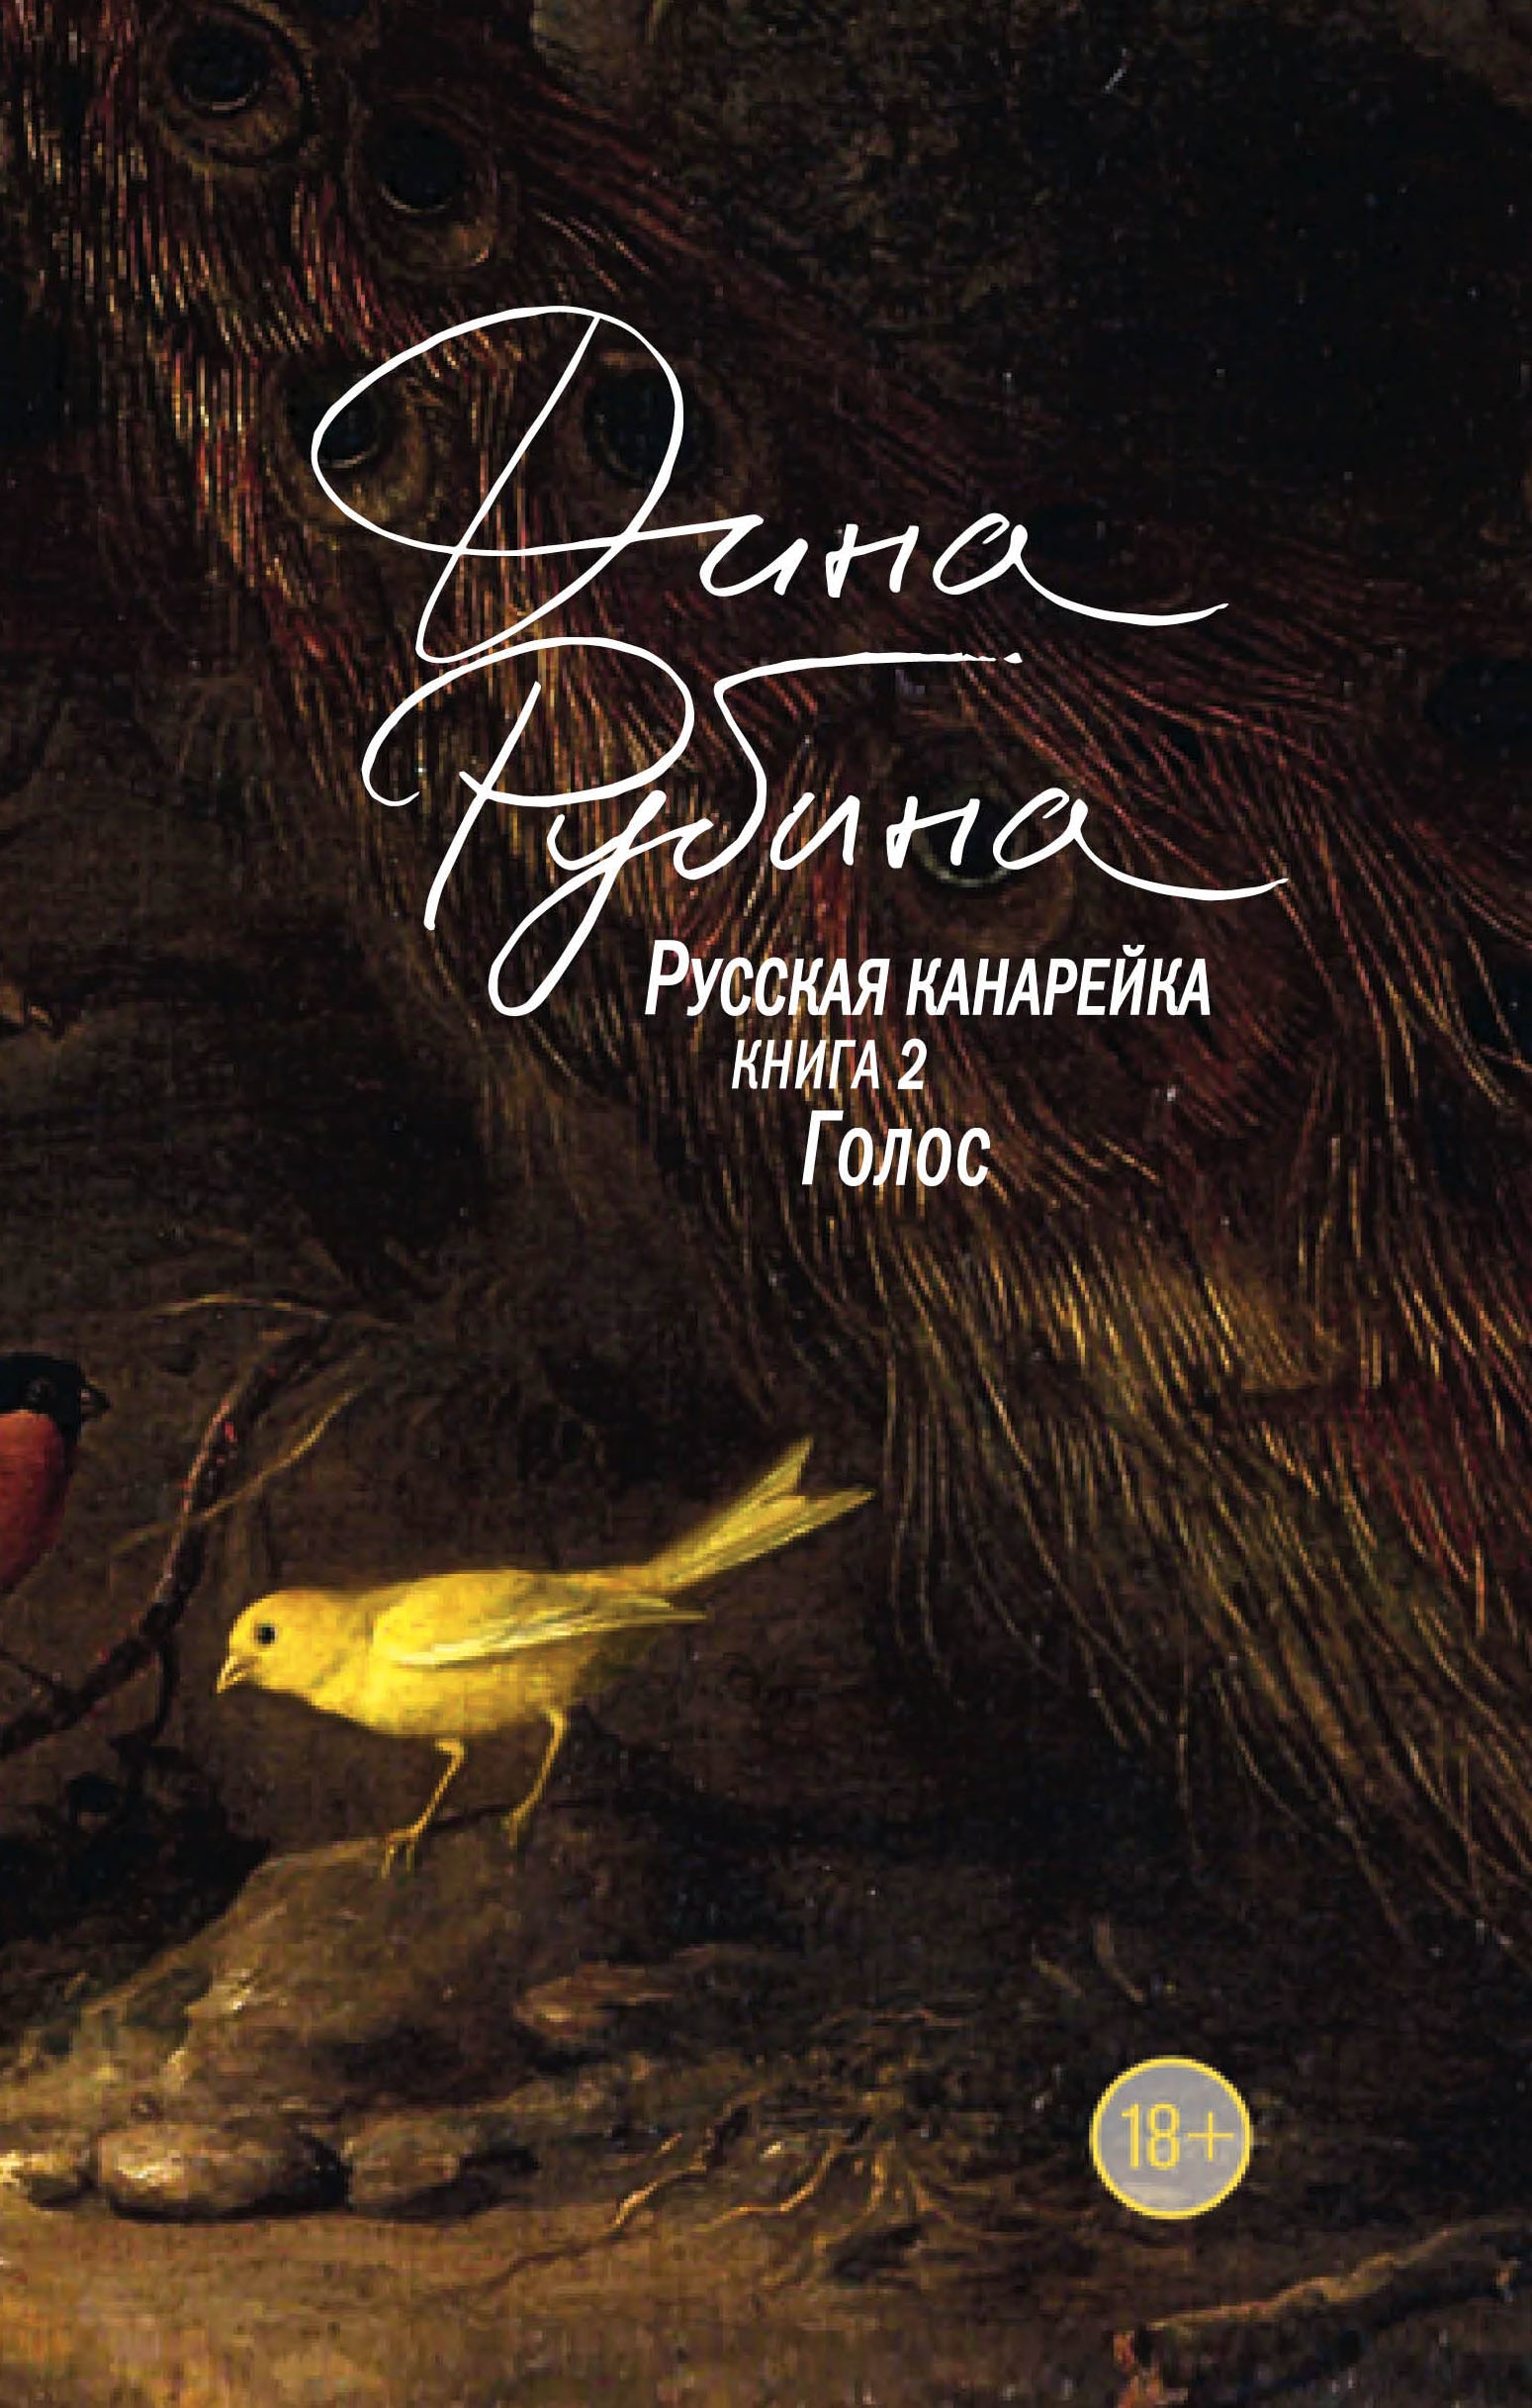 Book “Русская канарейка. Голос” by Дина Рубина — February 10, 2020